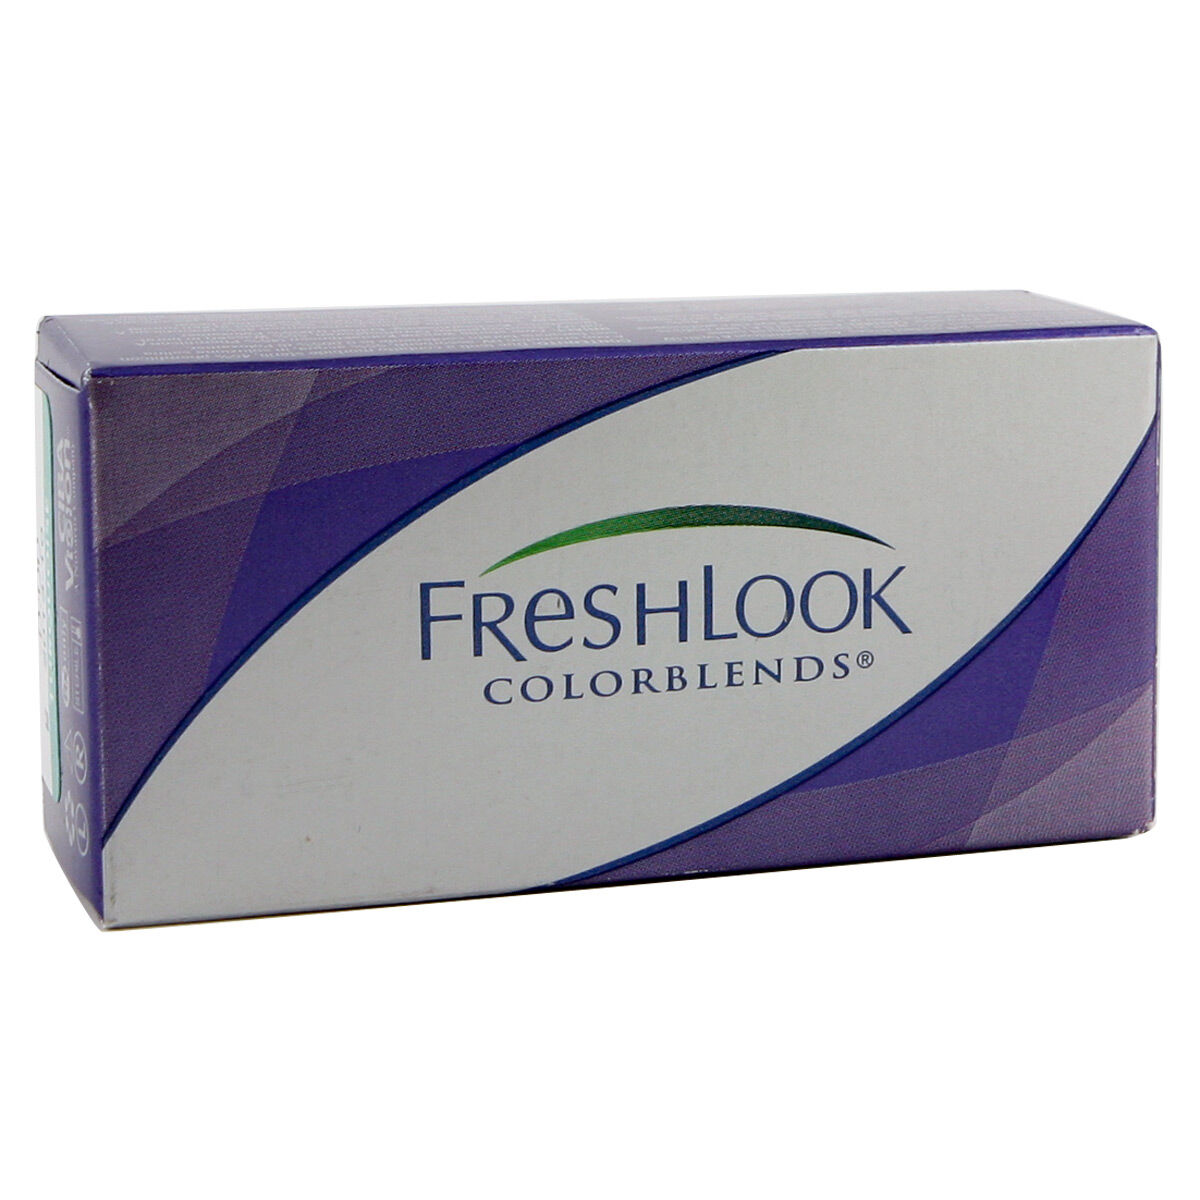 Alcon Freshlook Colorblends (2 Contact Lenses), Brown, Ciba Vision/Alcon, Monthly Coloured Lenses, Phemfilcon A